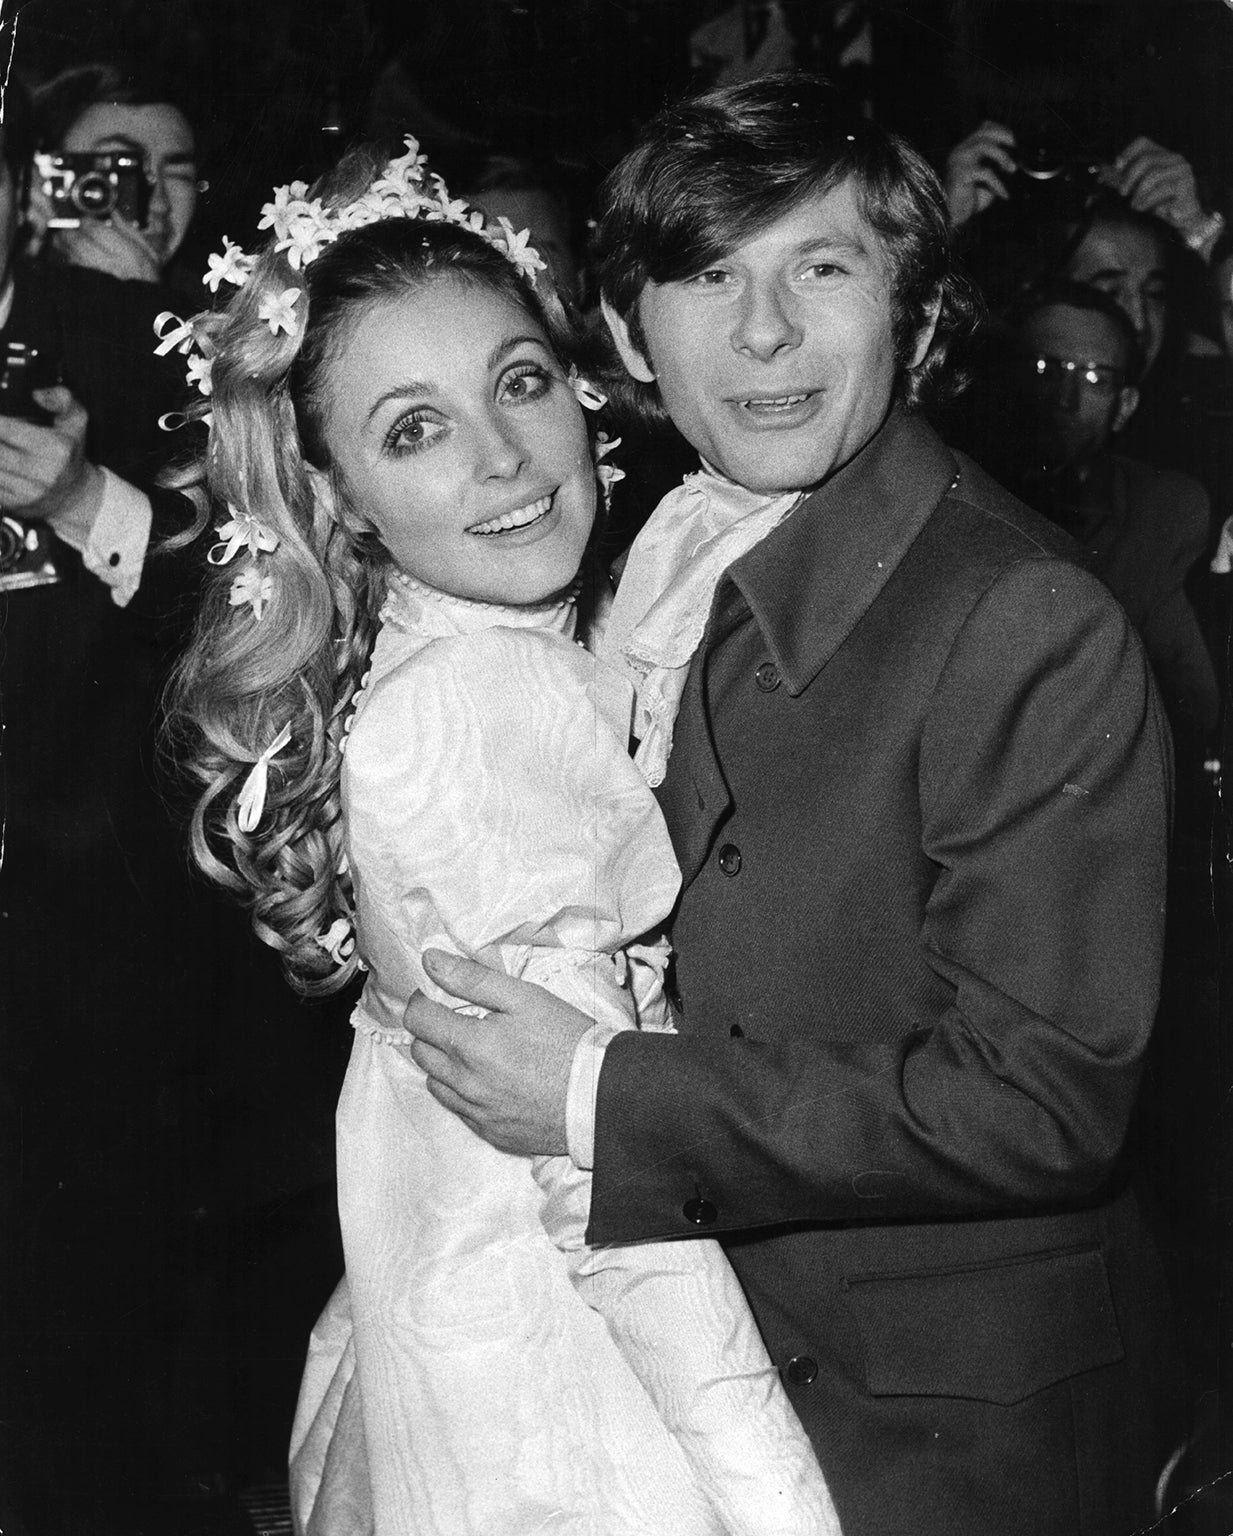 Sharon Tate at her wedding with Roman Polanski